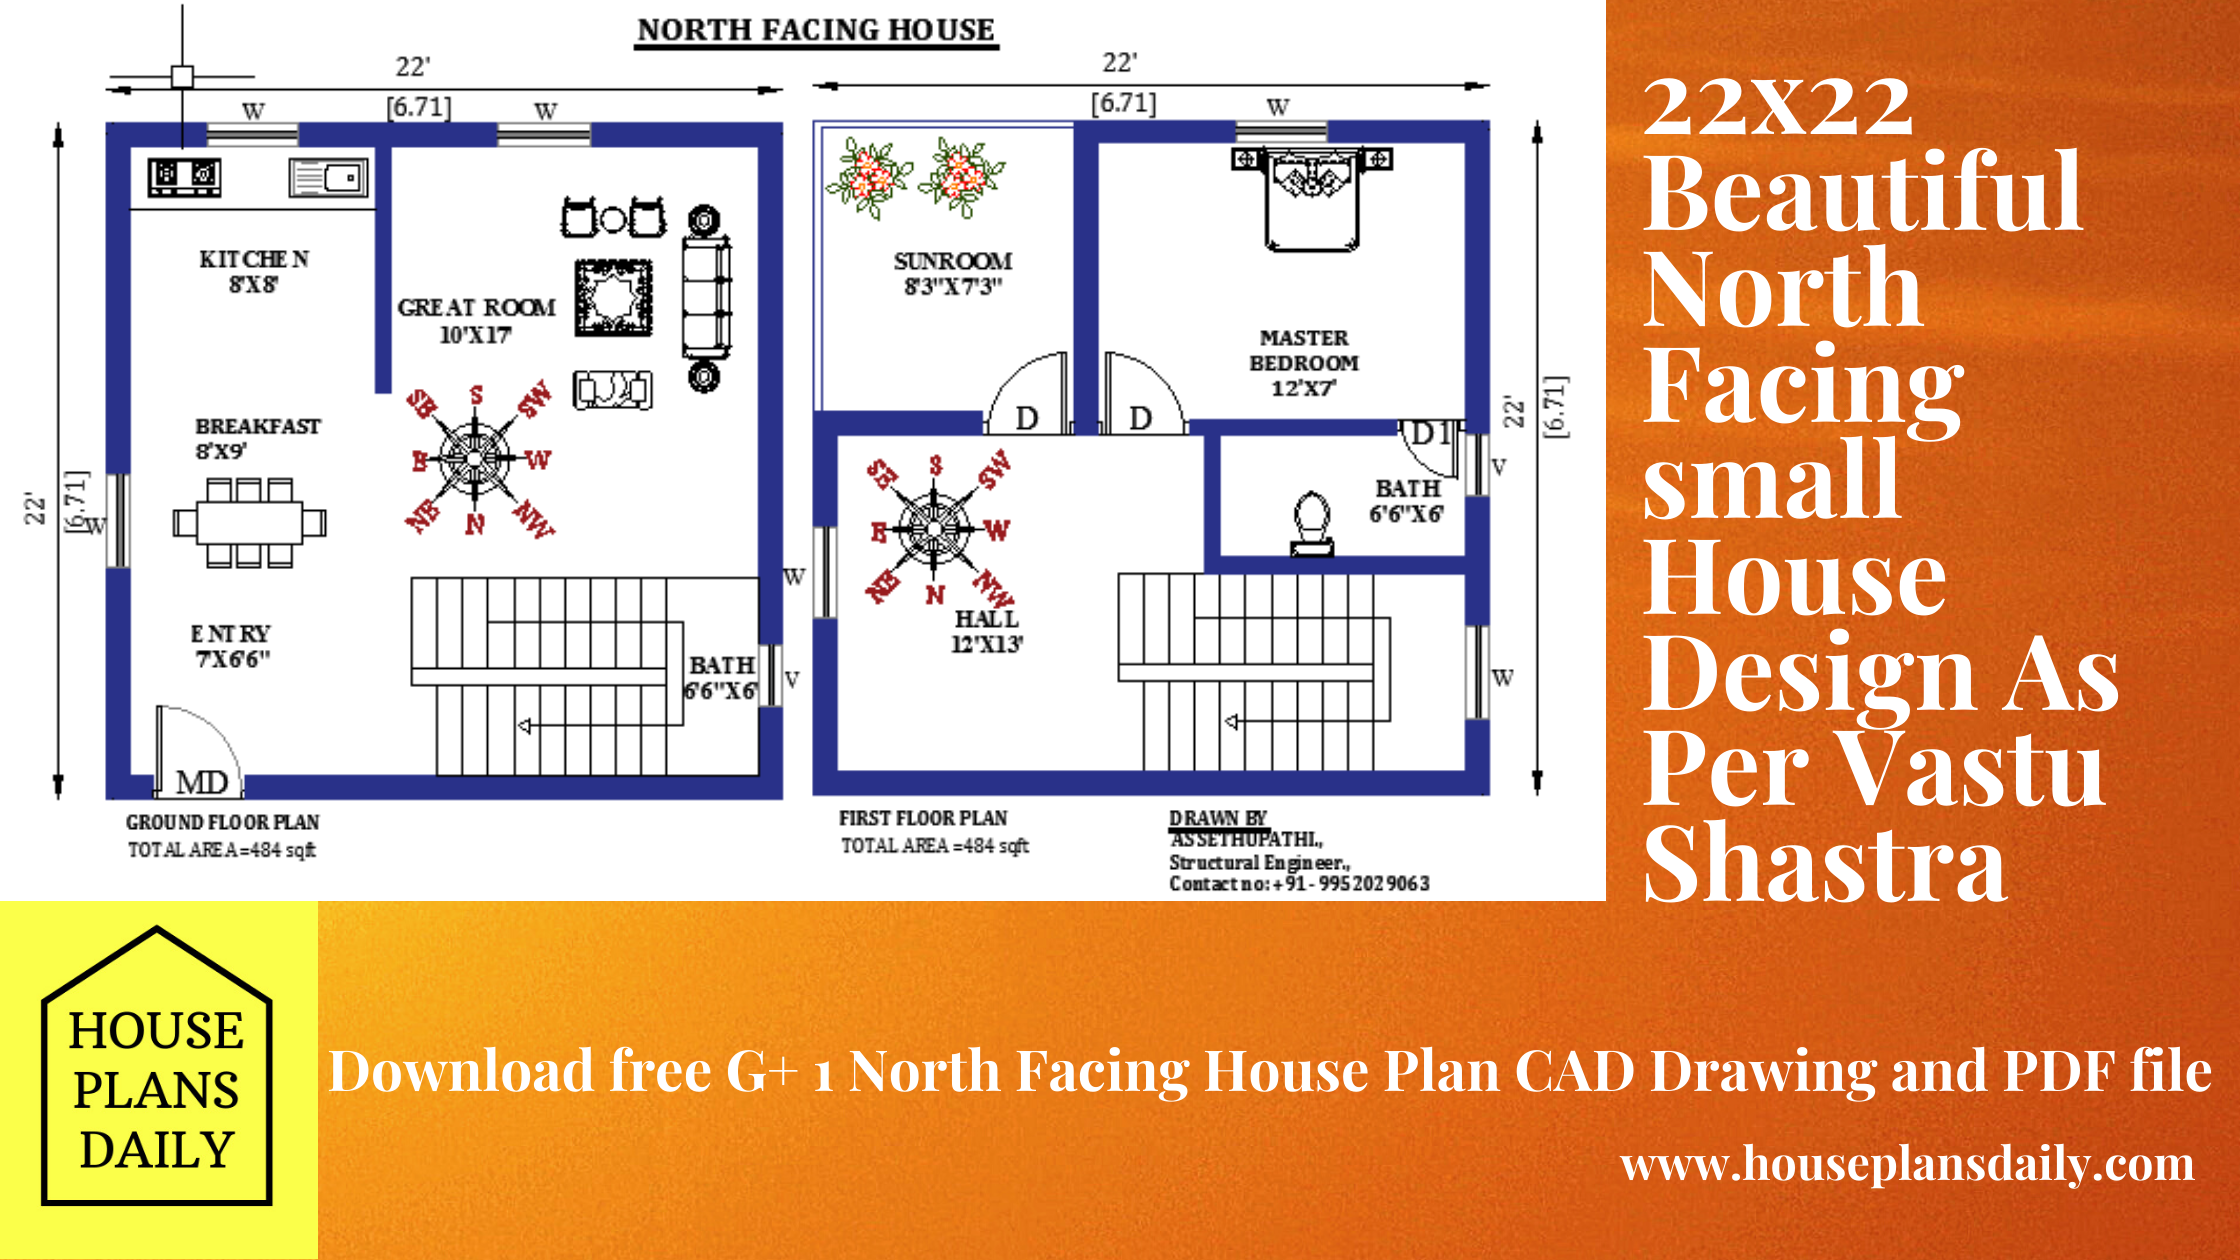 22x22 North Facing small House Design As Per Vastu Shastra